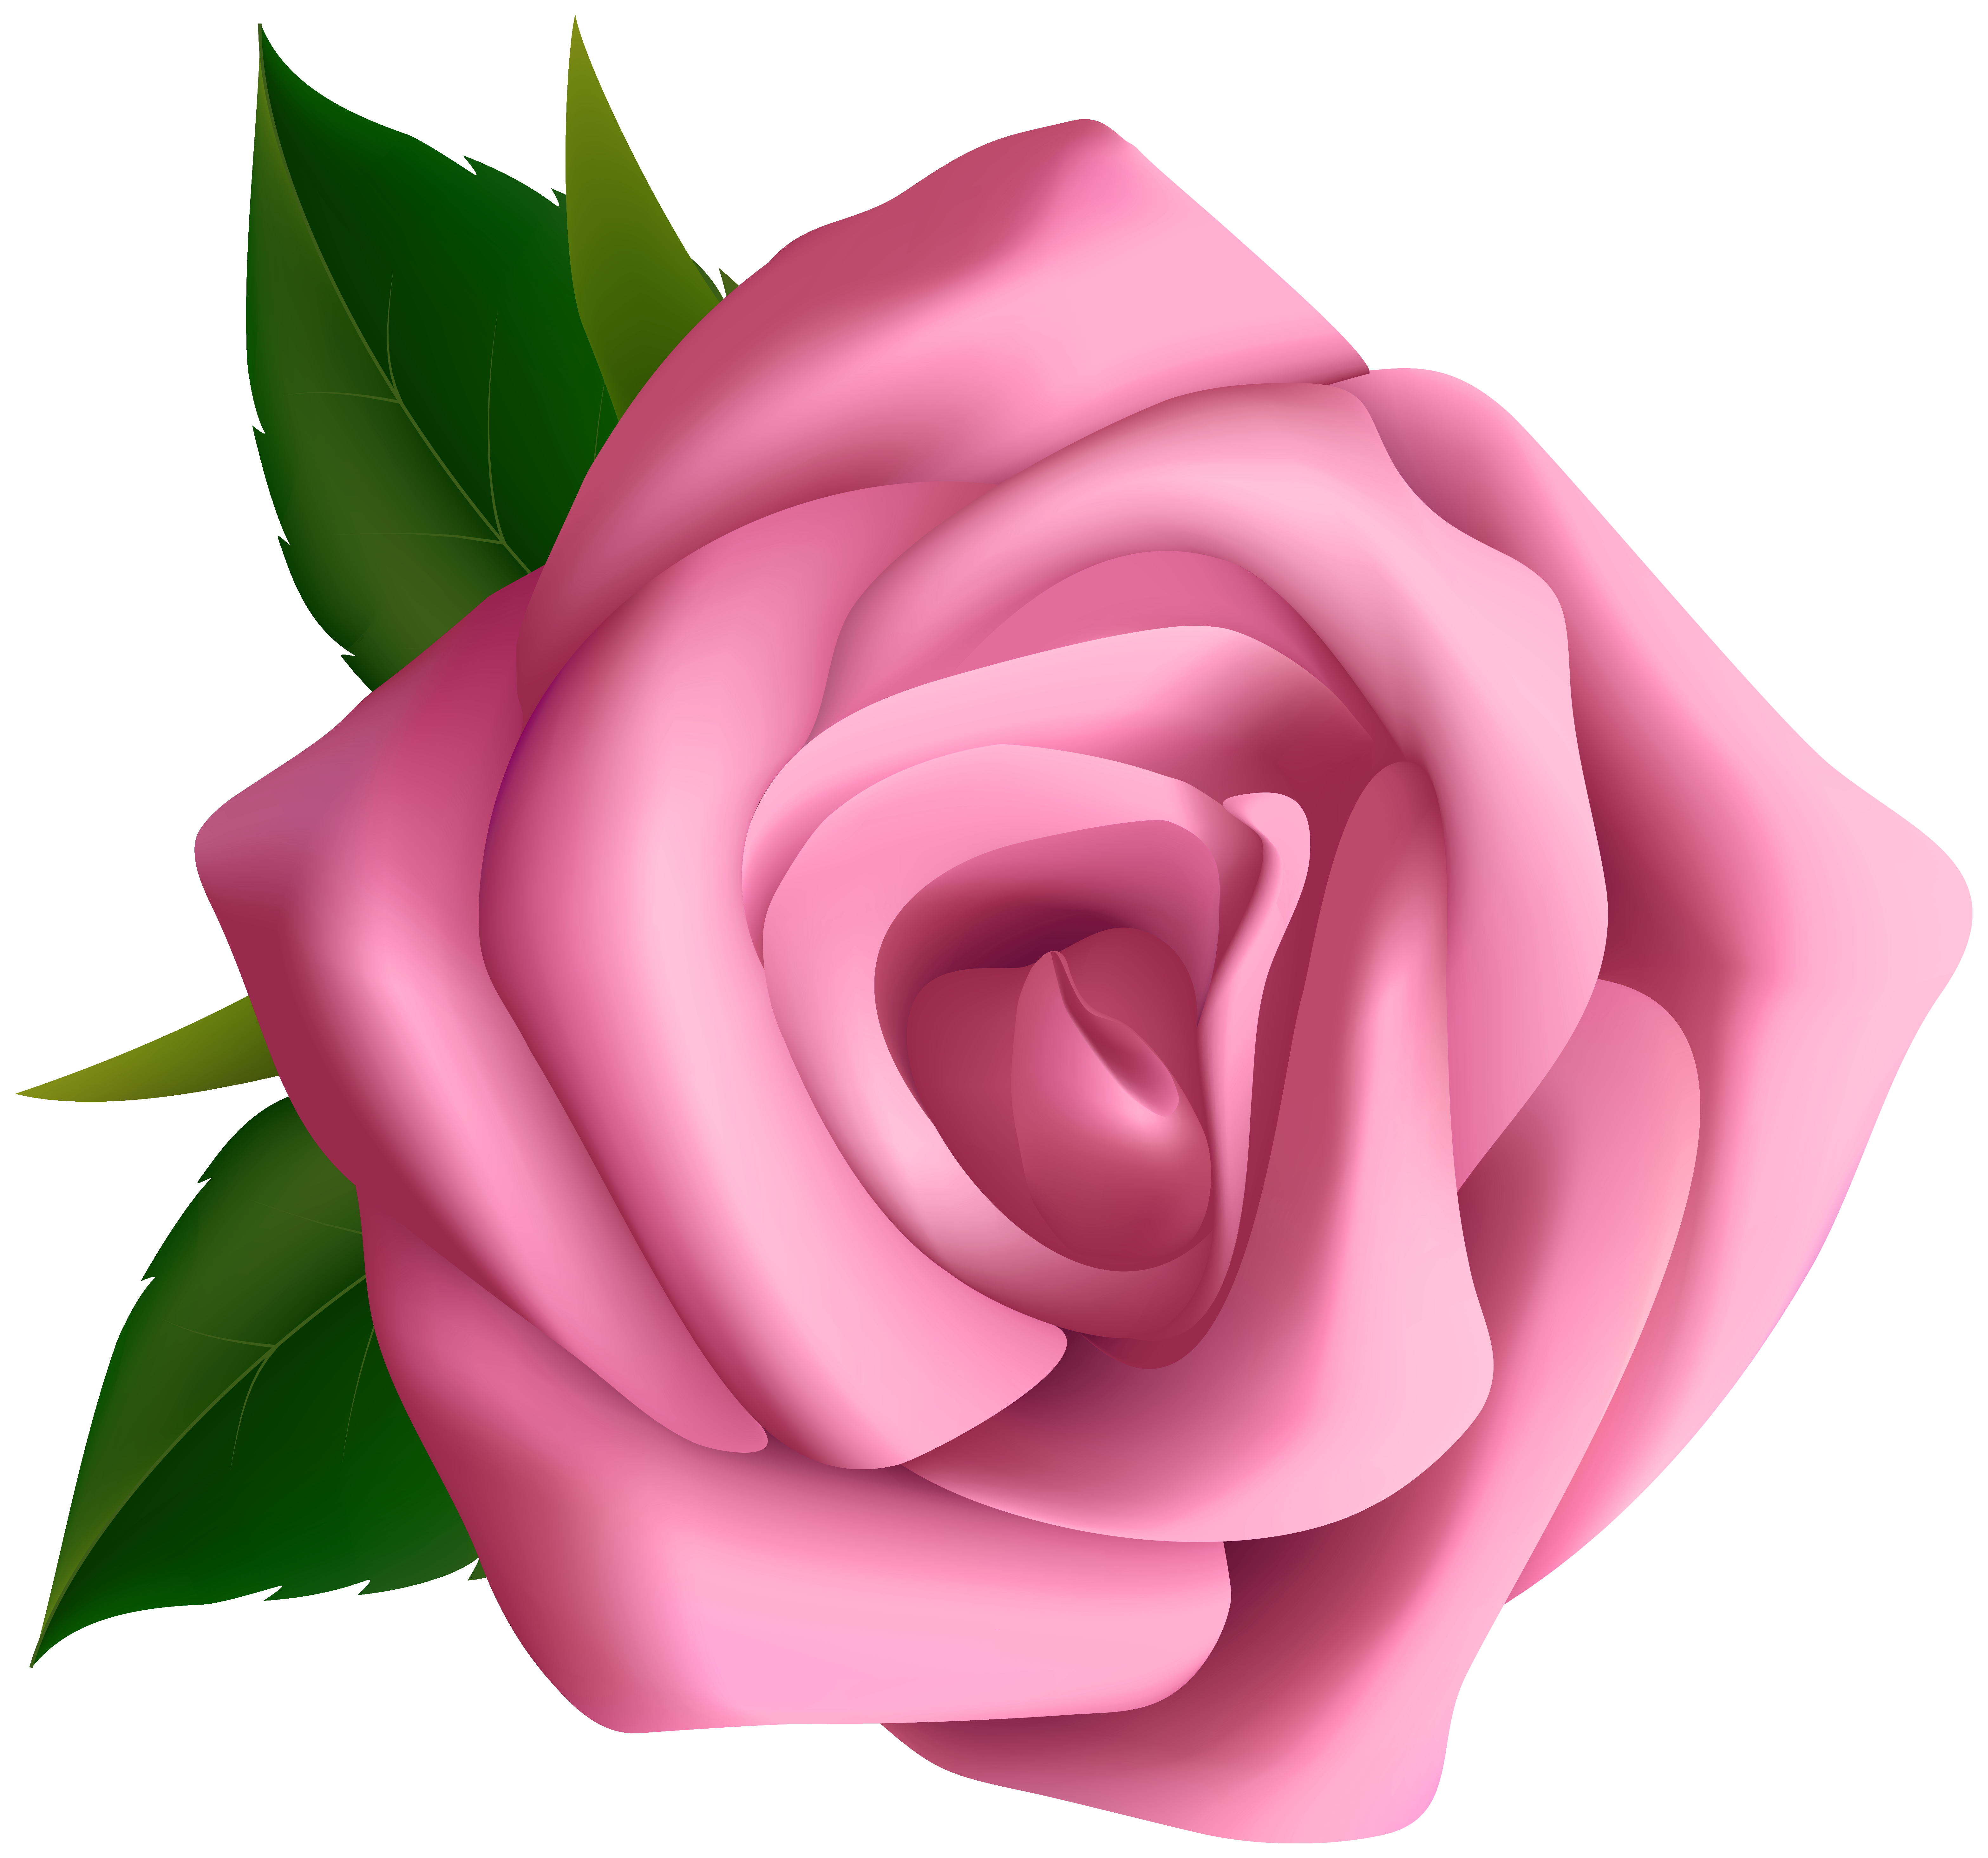 Soft pink png image. Clipart rose clip art